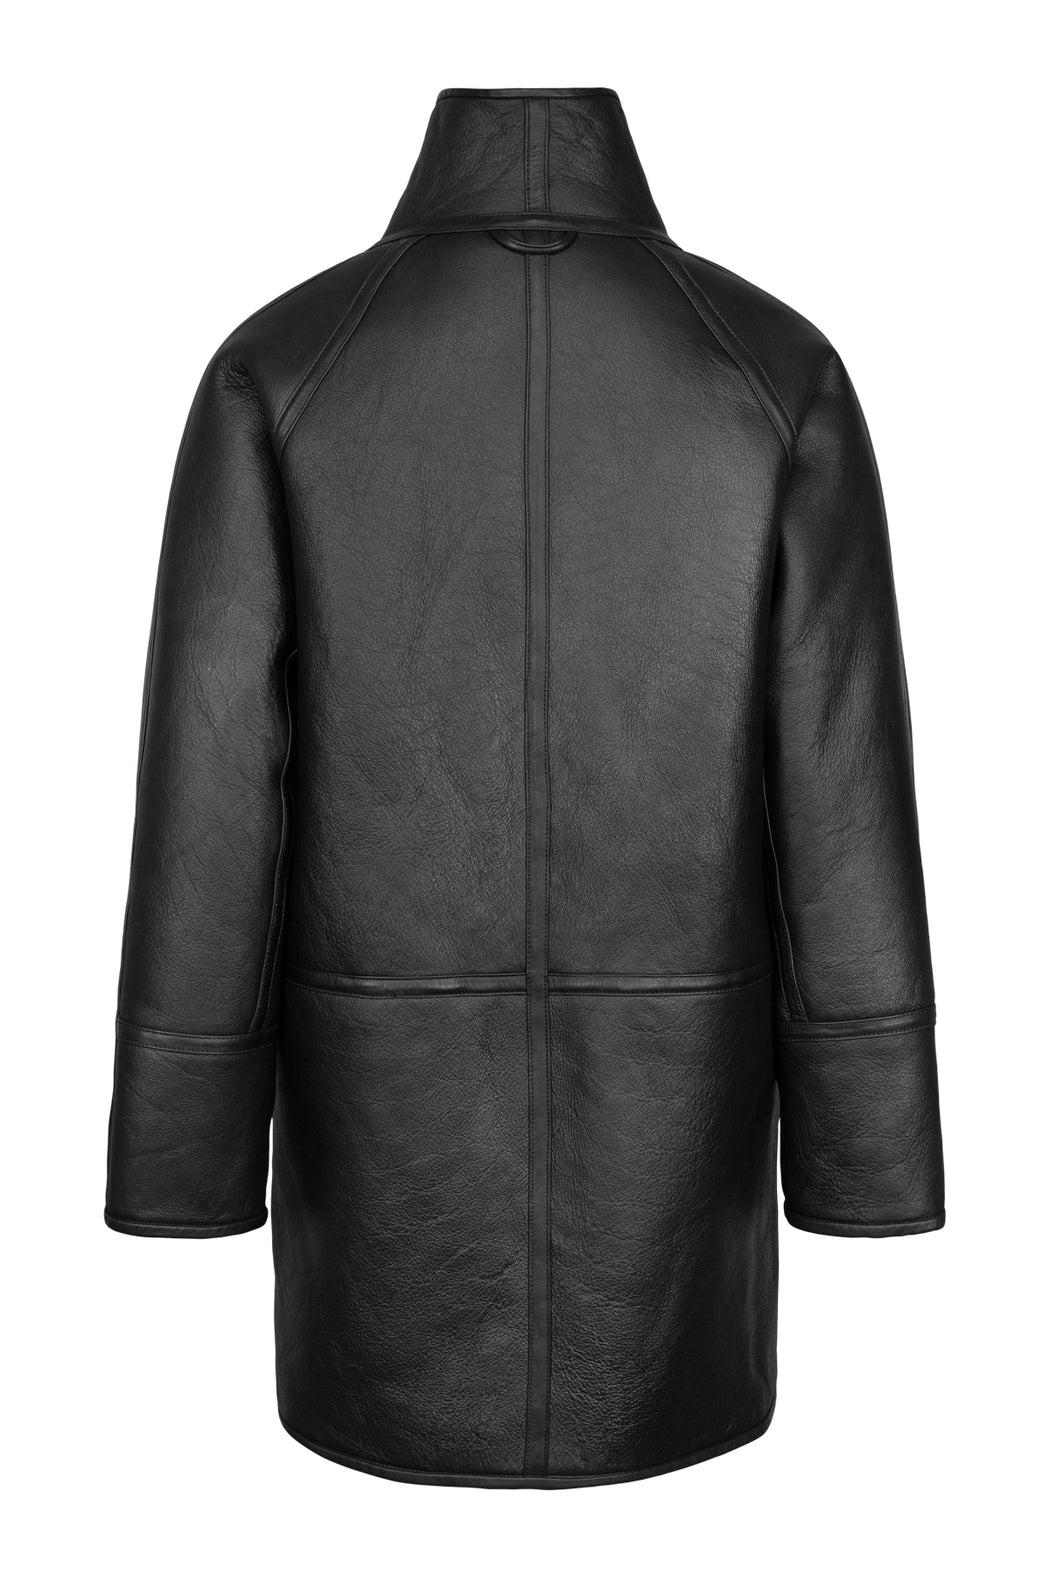 Envelope1976 Hanna jacket - Shearling Jacket Black